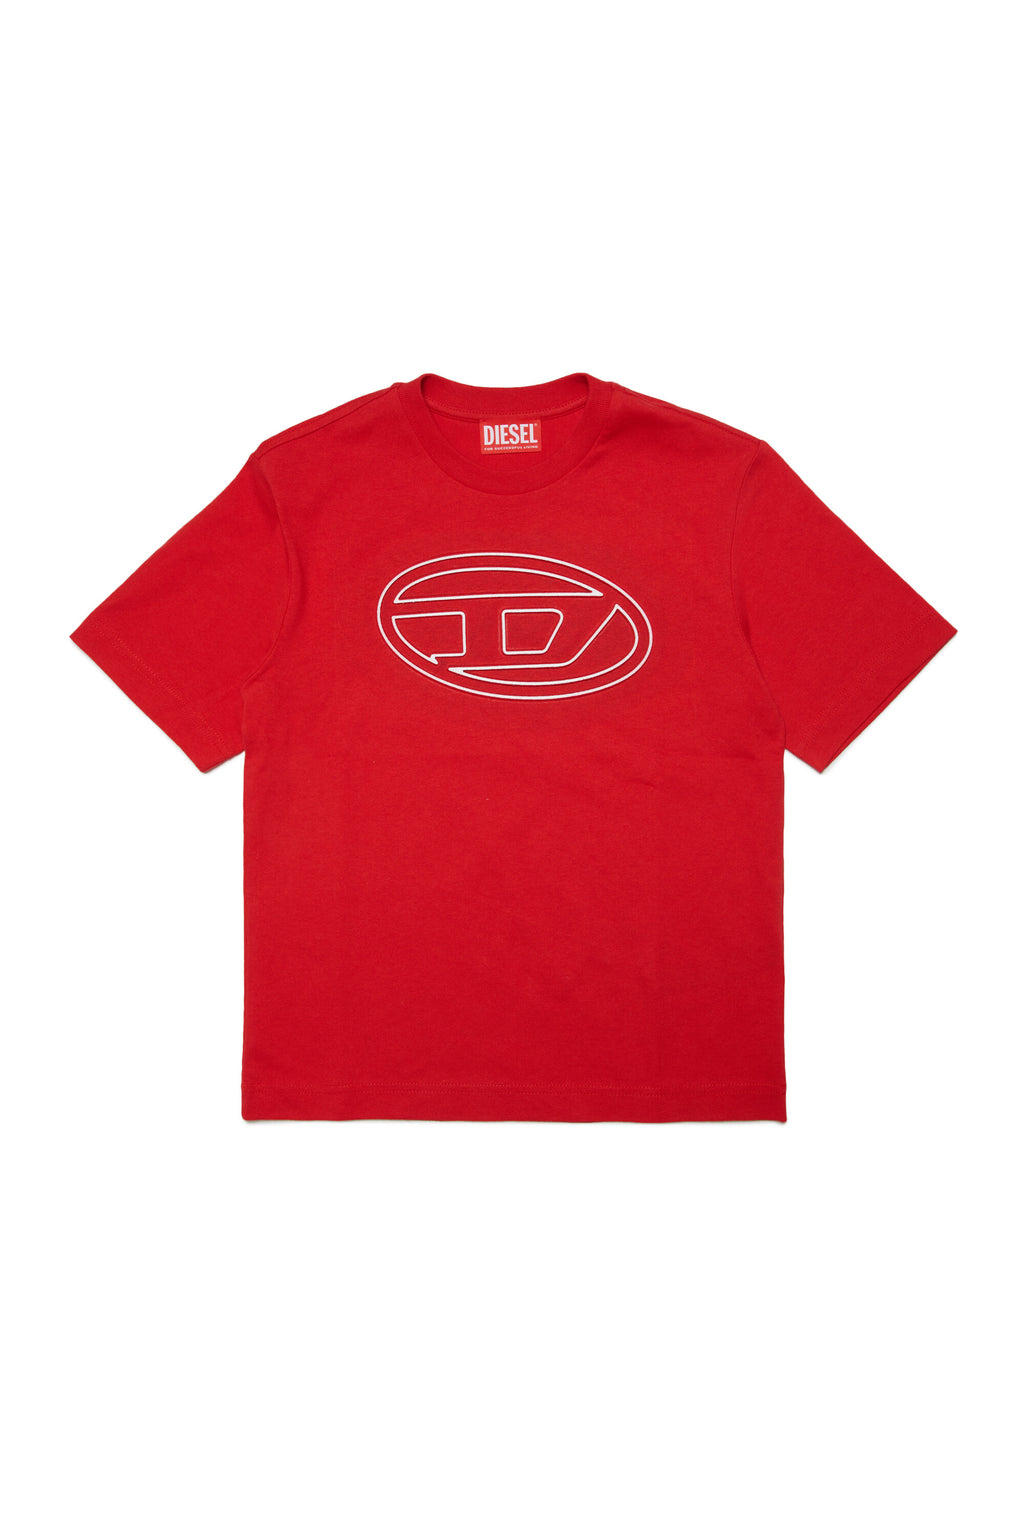 T-shirt con logo Oval D